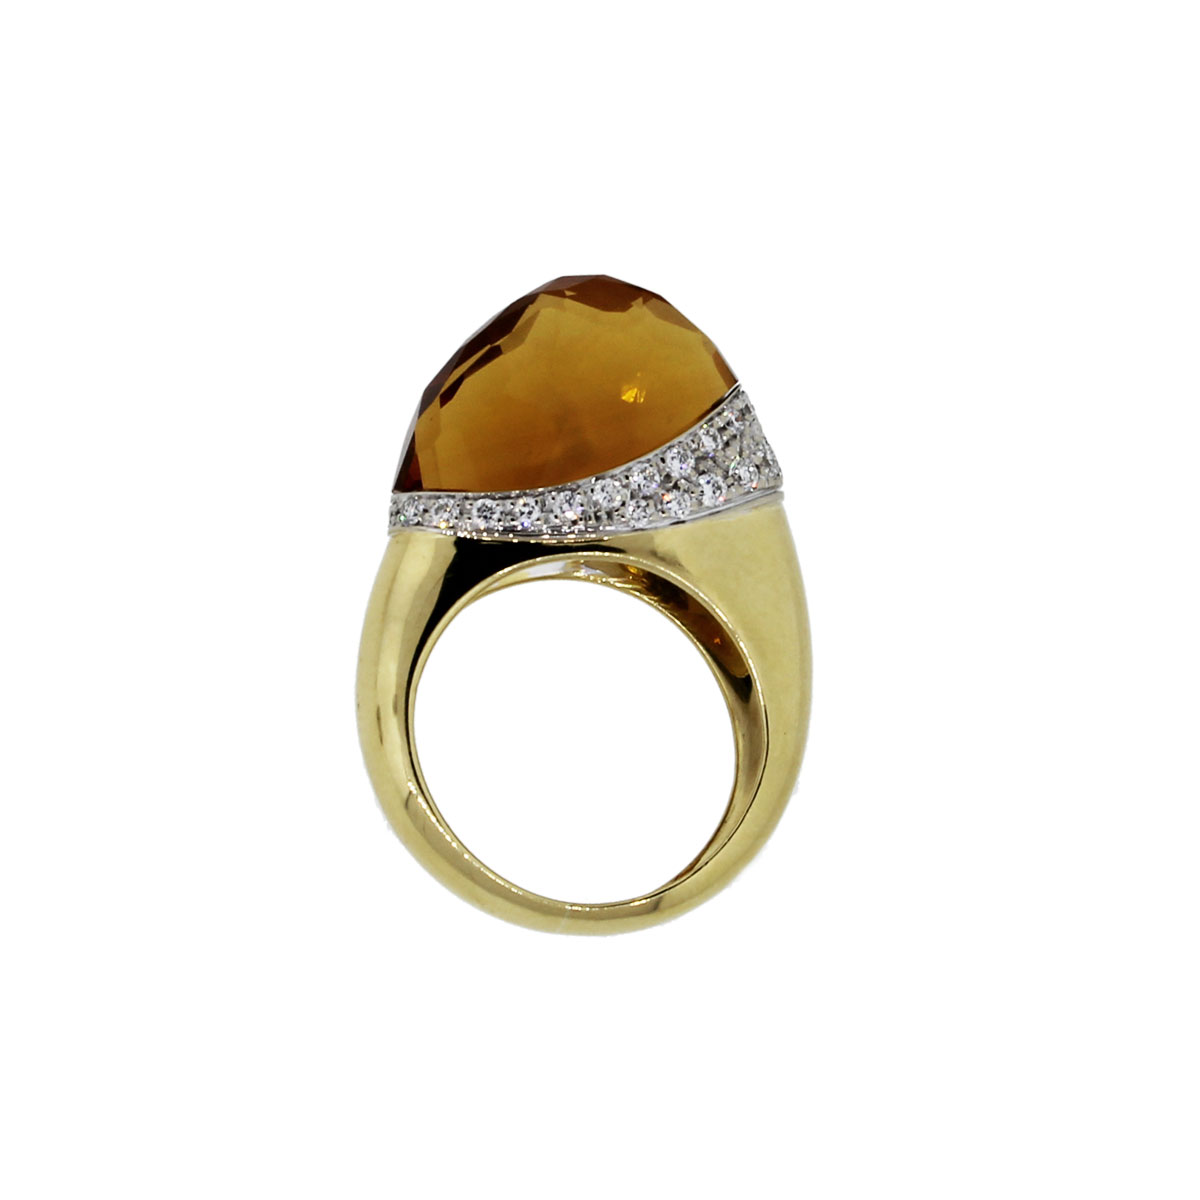  3.27ct Citrine Gemstone with Diamonds Ring, White Gold, 18 K, $1,595 